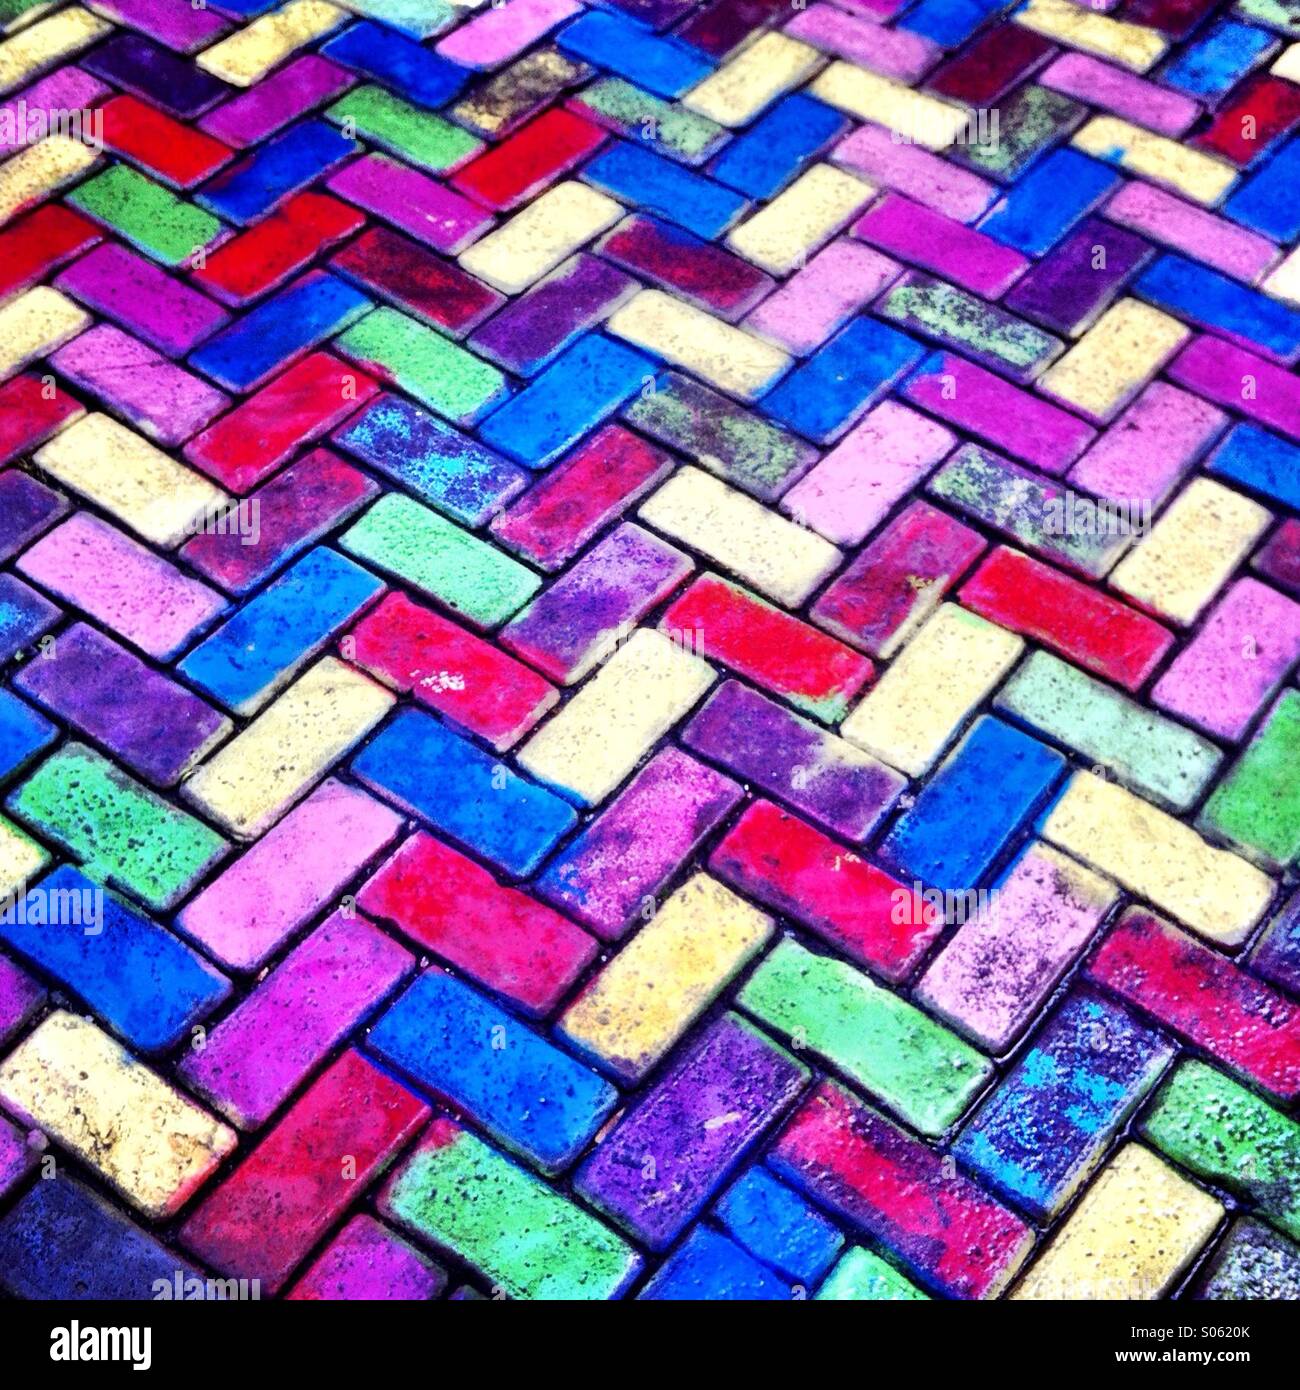 A colorful brick sidewalk. Amsterdam Netherlands Europe. Stock Photo